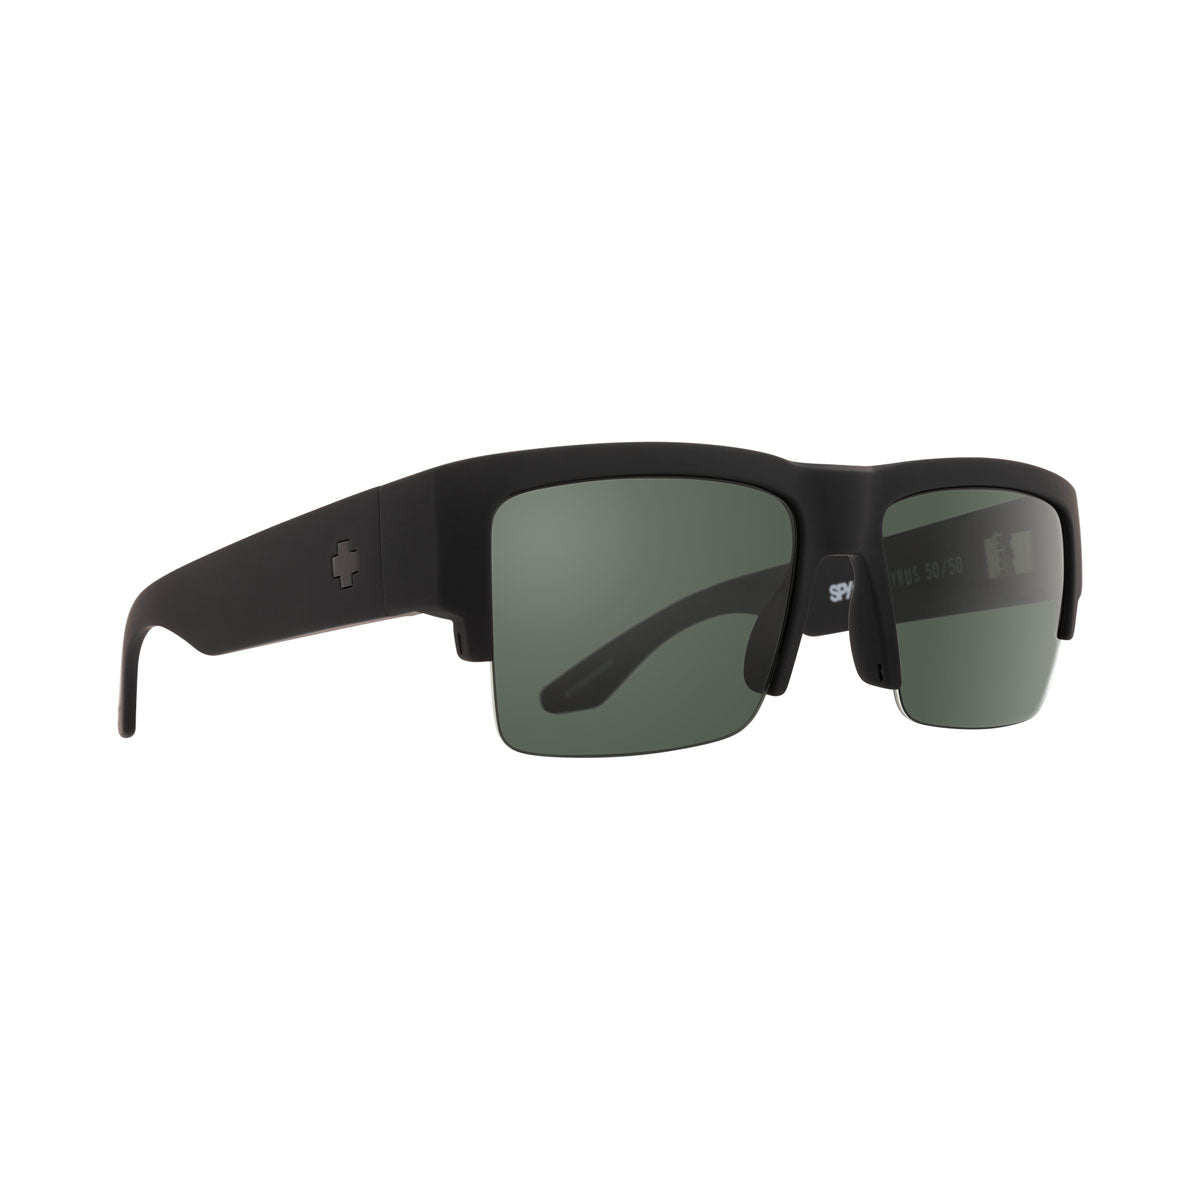 Spy Cyrus 5050 Polarized Sunglasses